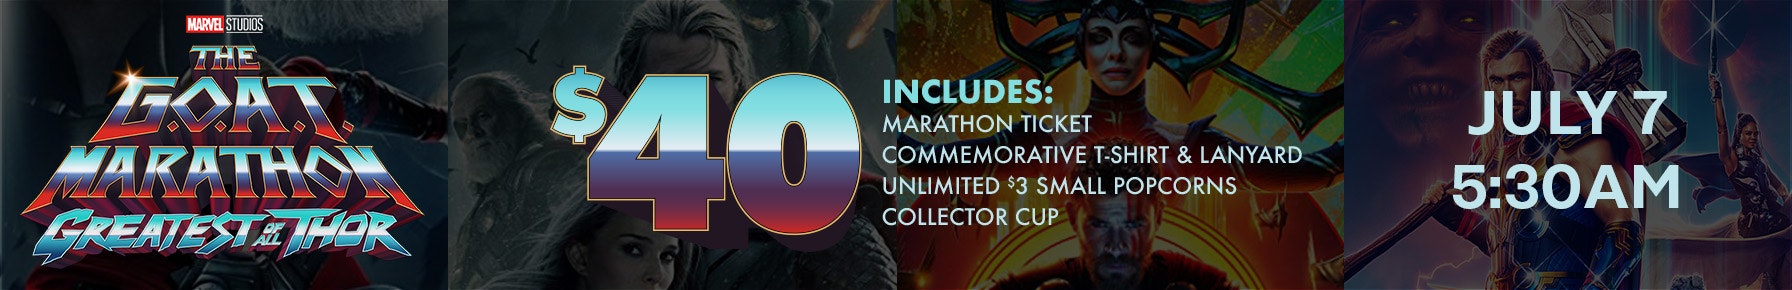 Thor Marathon Movie Details Ad